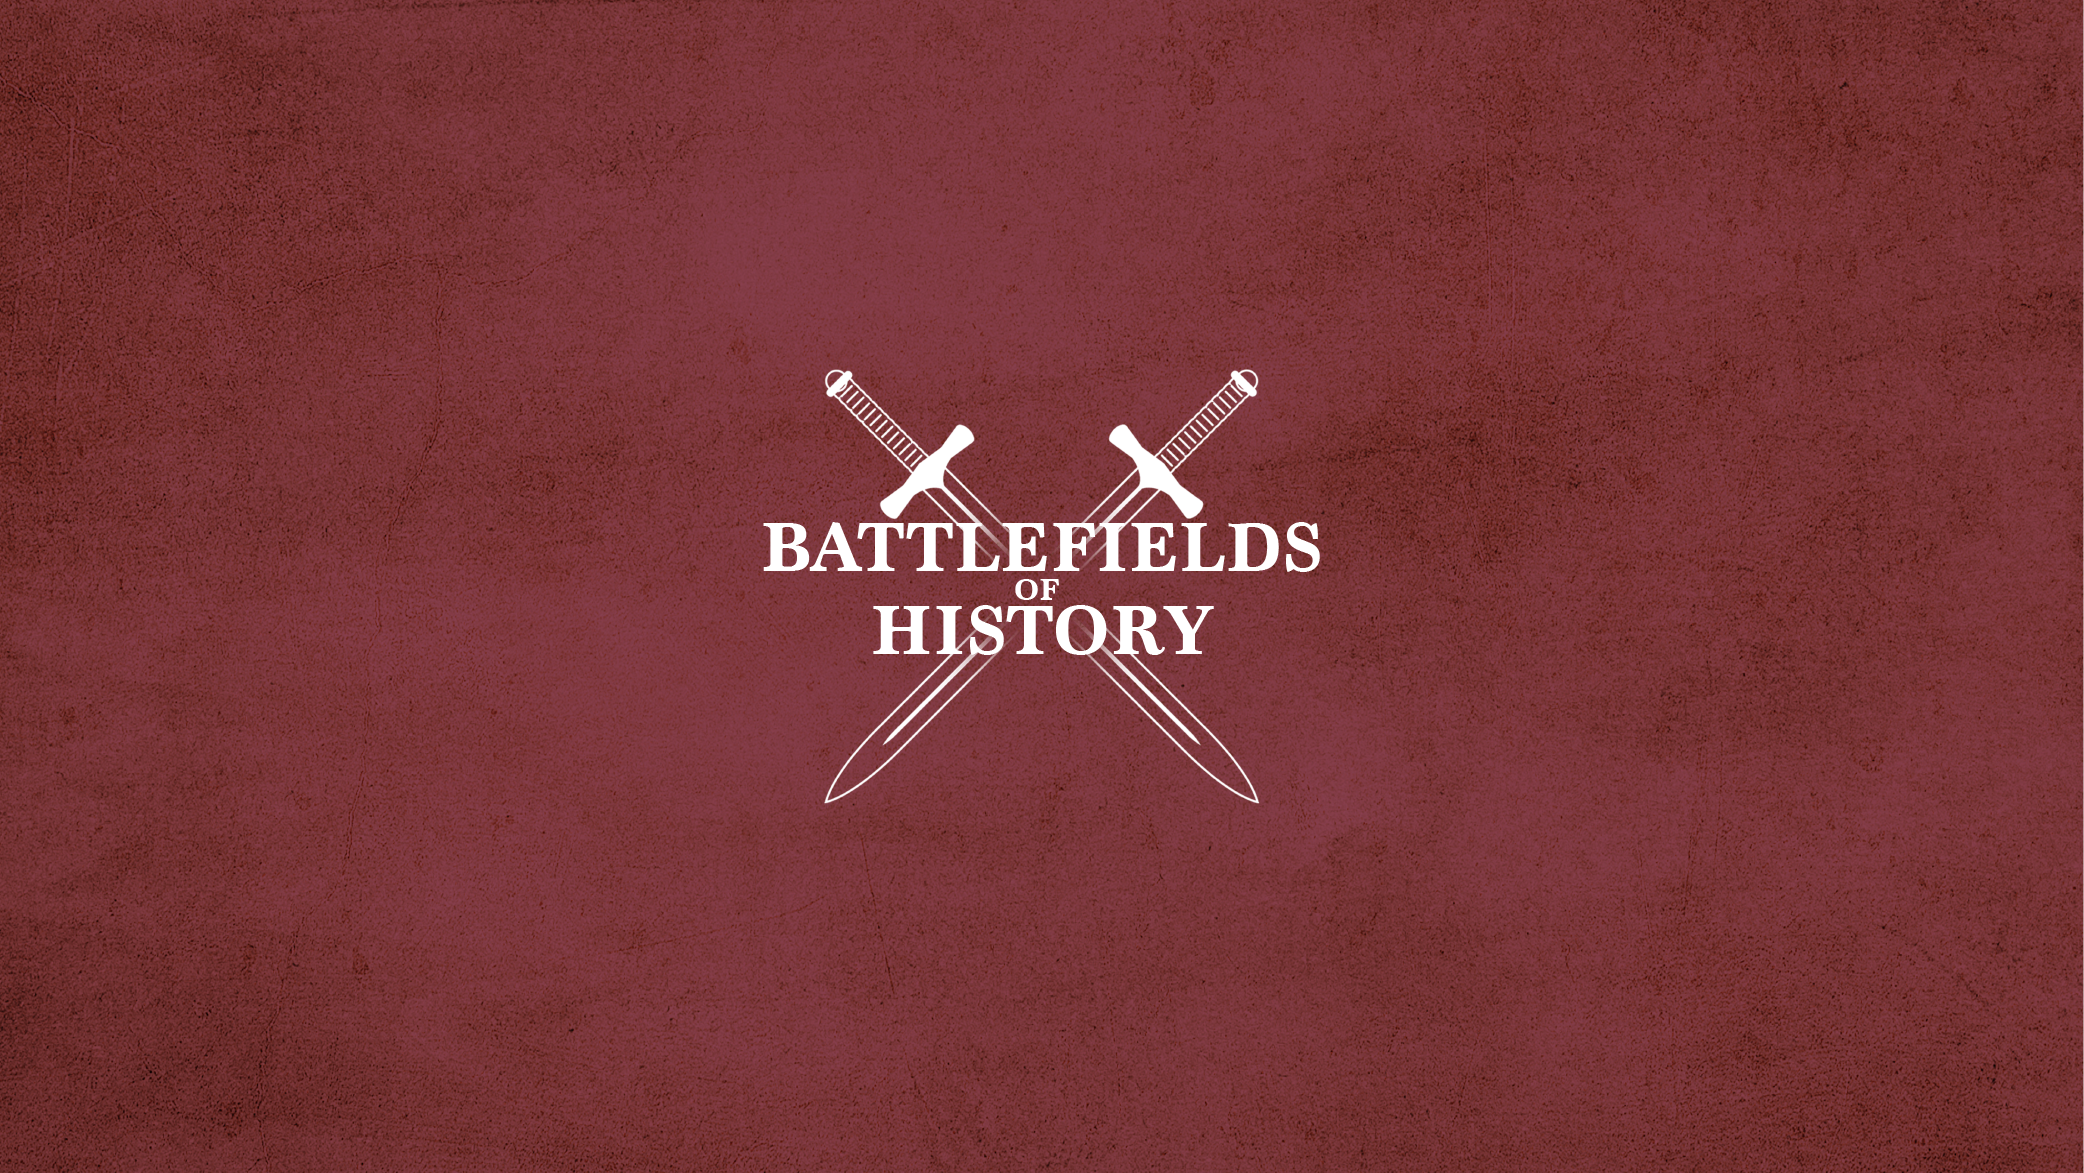 Battlefields_Artwork-01